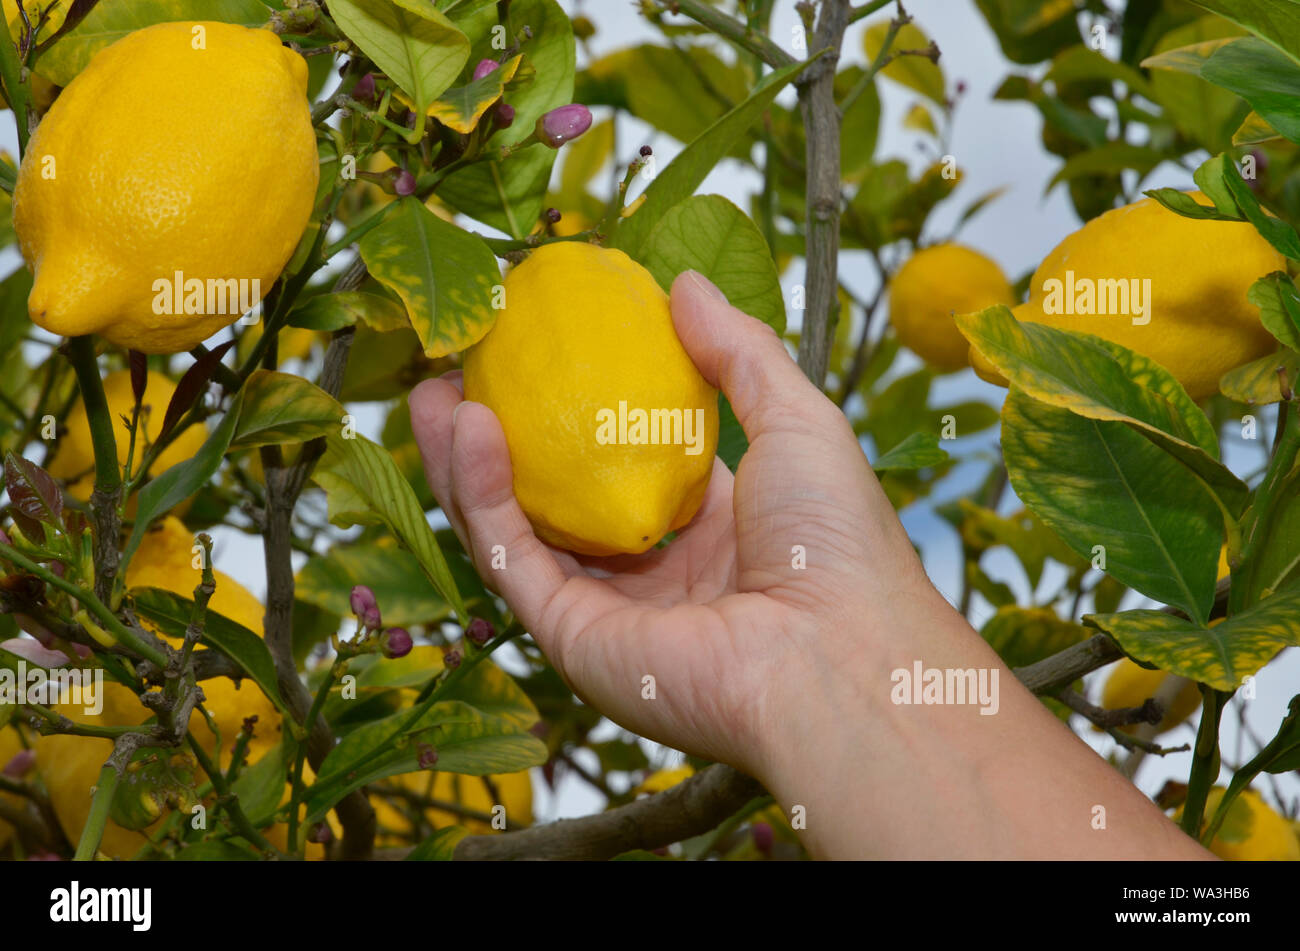 Hand of man picking a ripe lemon from tree Stock Photo